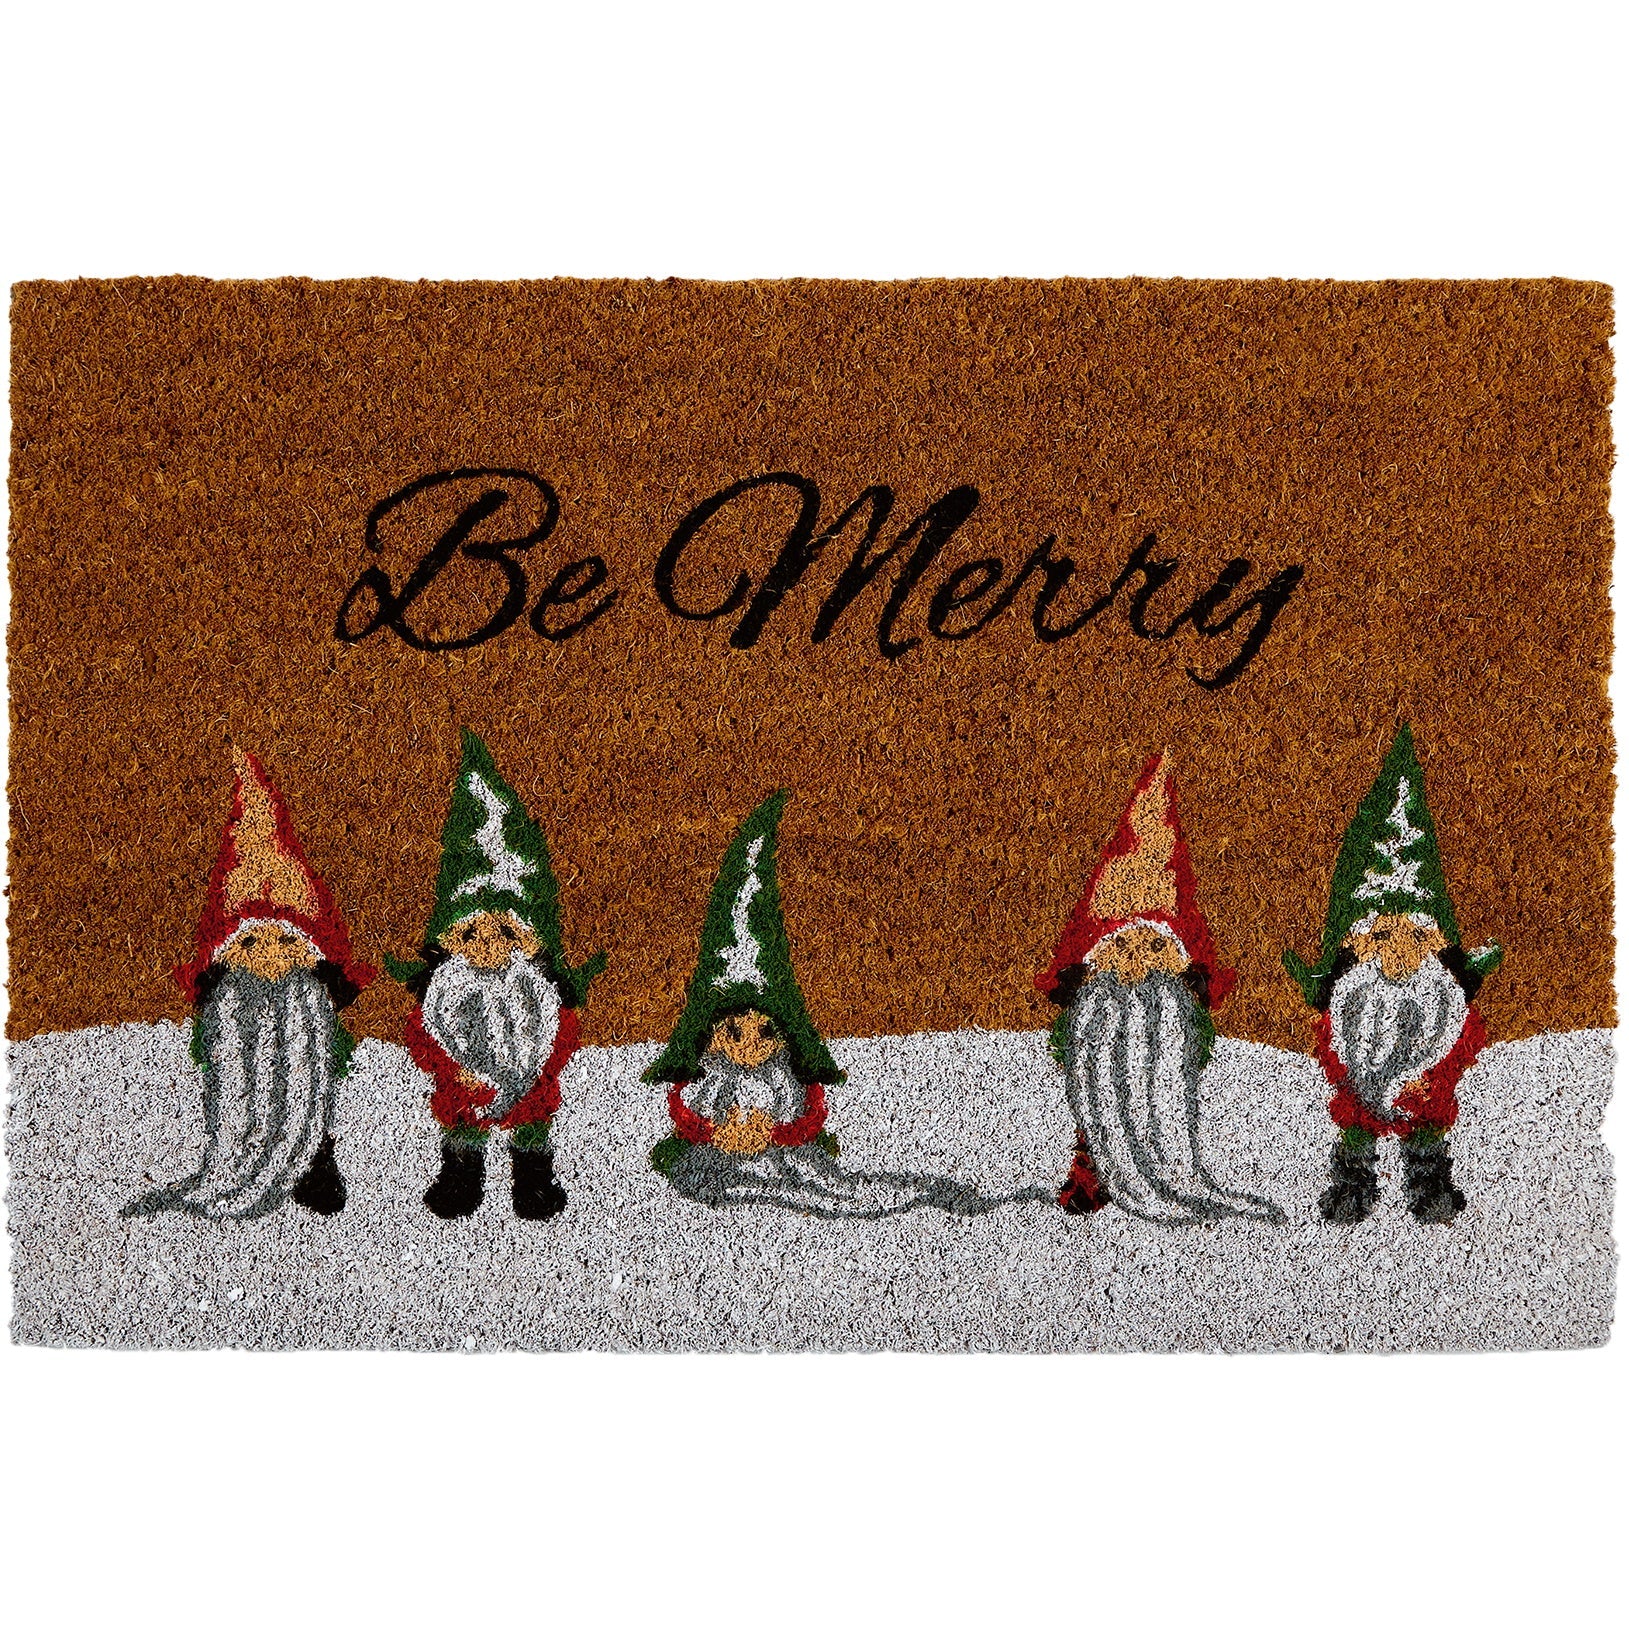 Accents AC211243 Coir Door Mat 40x60cm Gnomes Christmas - Various Designs - Premium Doormats from Premier Decorations - Just $9.95! Shop now at W Hurst & Son (IW) Ltd